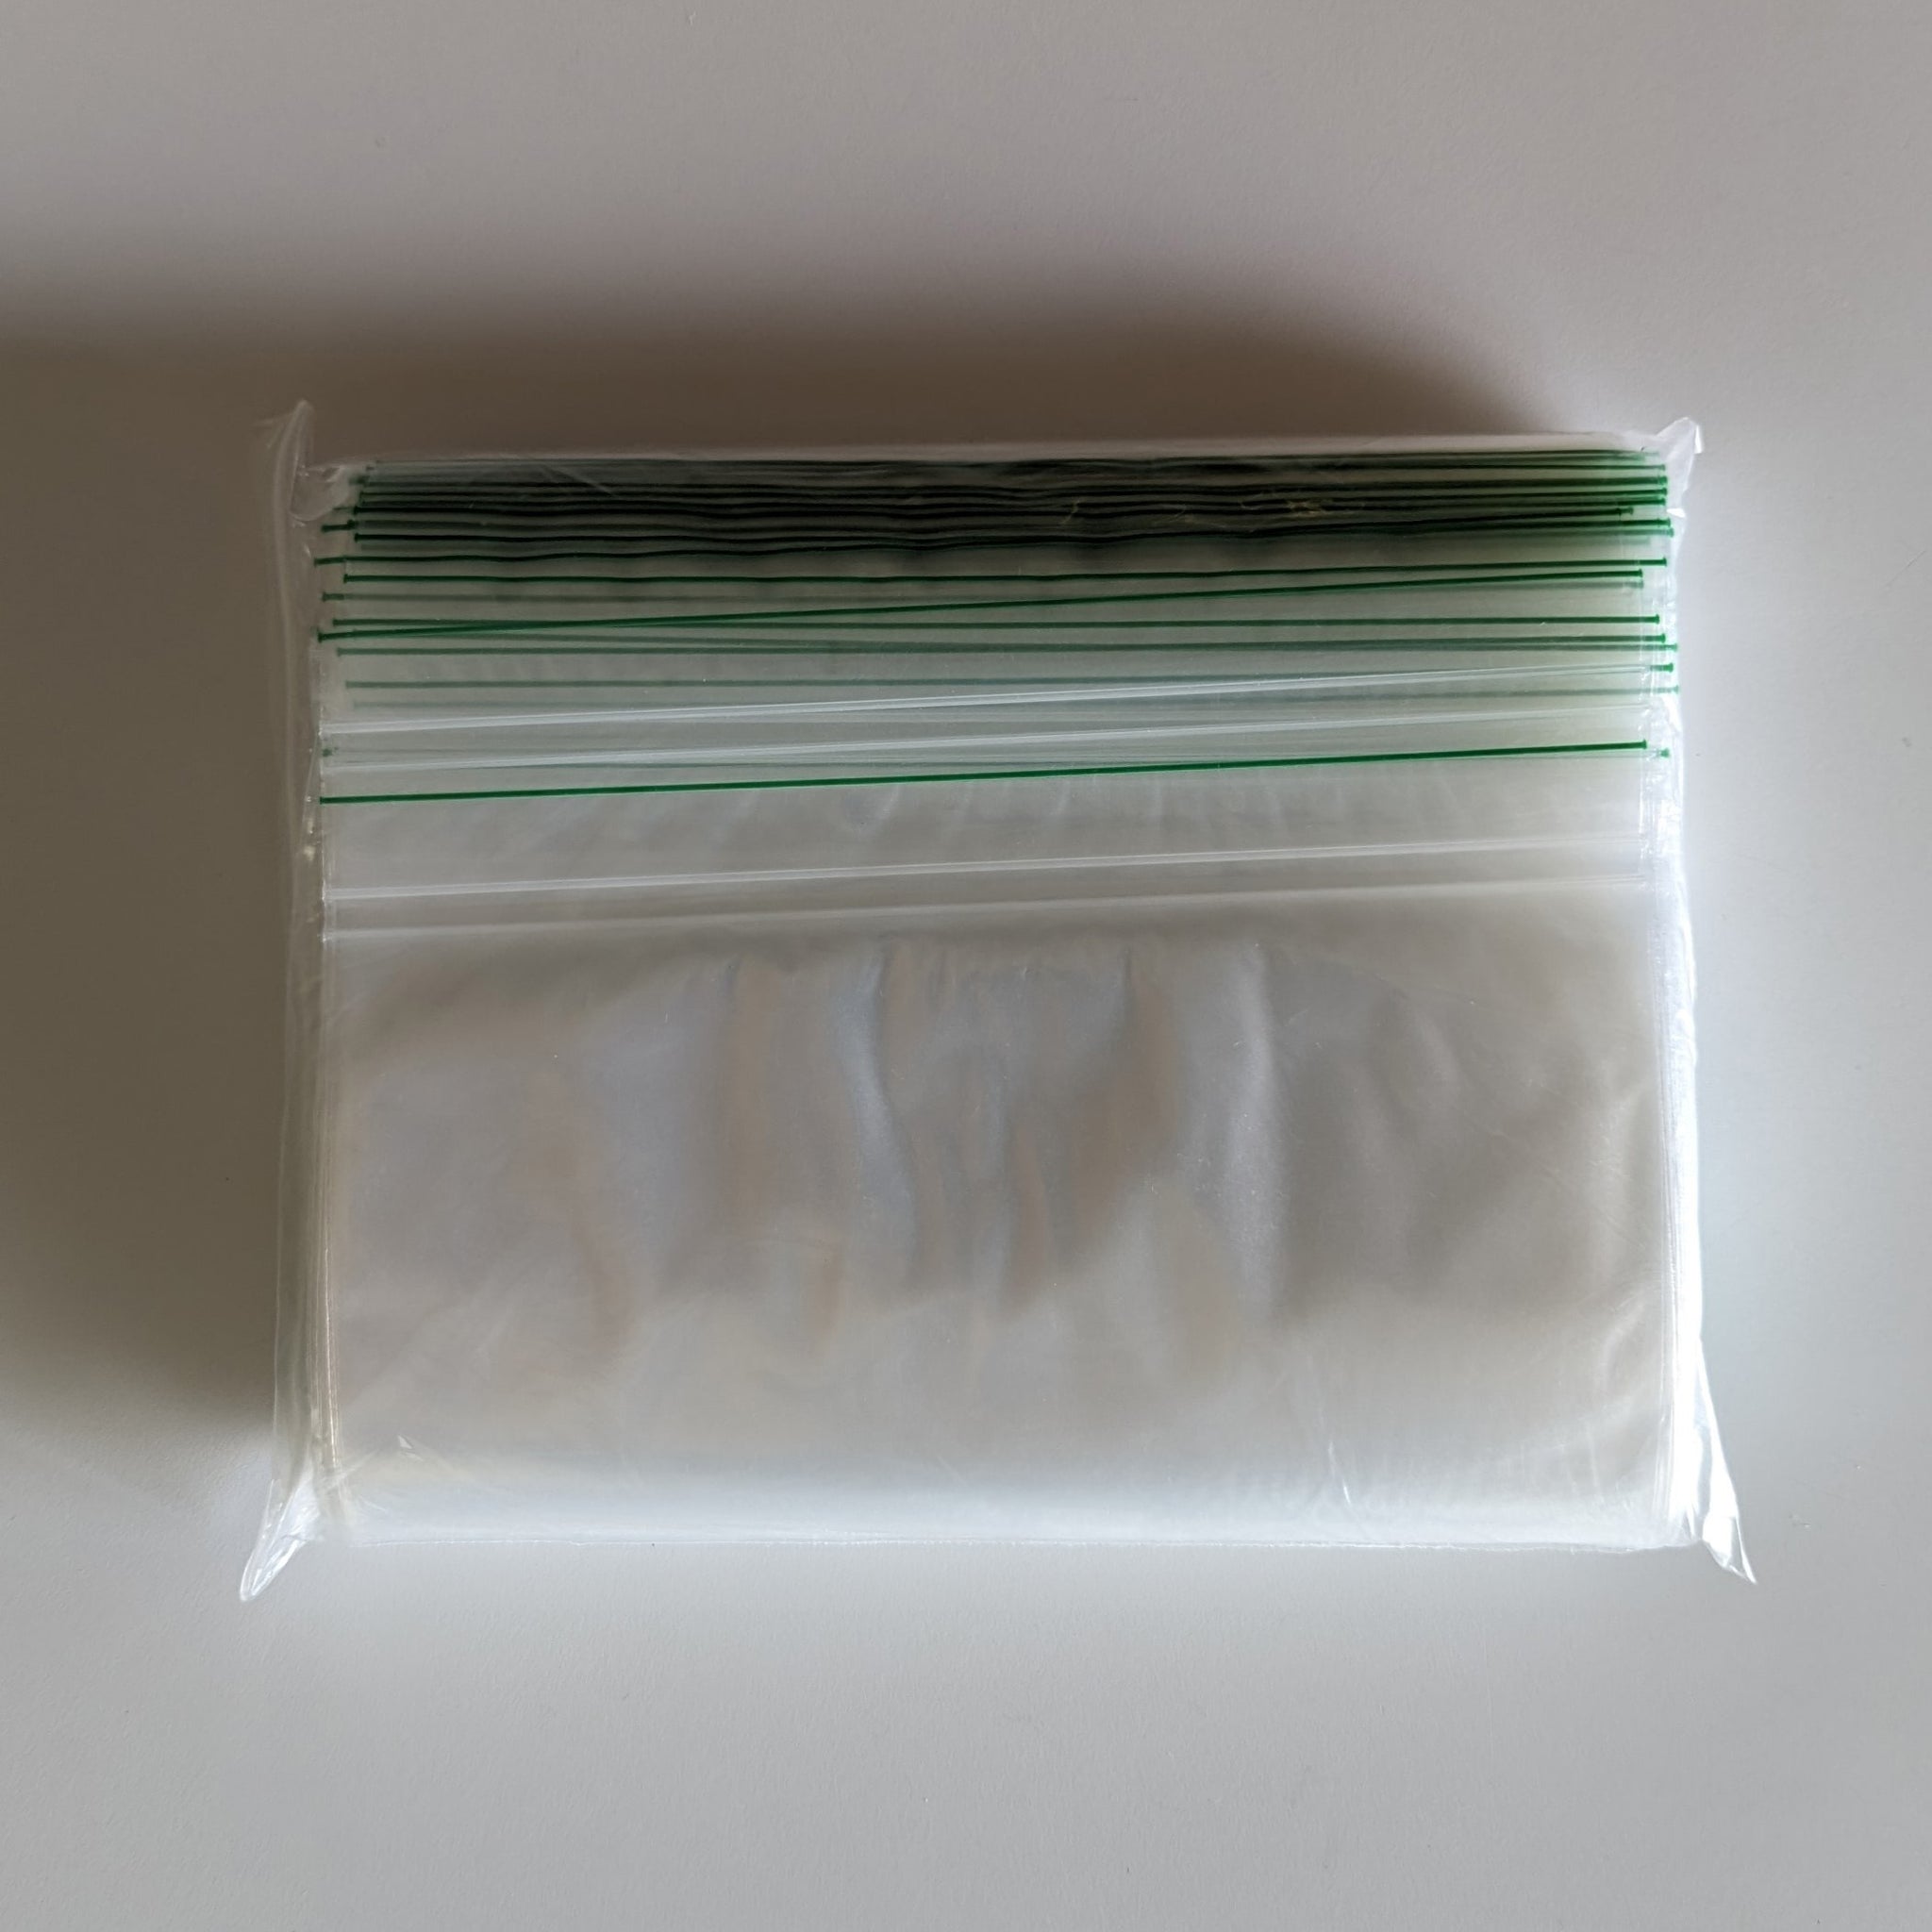 Small Zipper Bags, 2 X 3, 2 Mil Poly, Plastic Bags, Virgin Polyethylene 2  Inch X 3 Inch Small Bags, Quantity of 100 